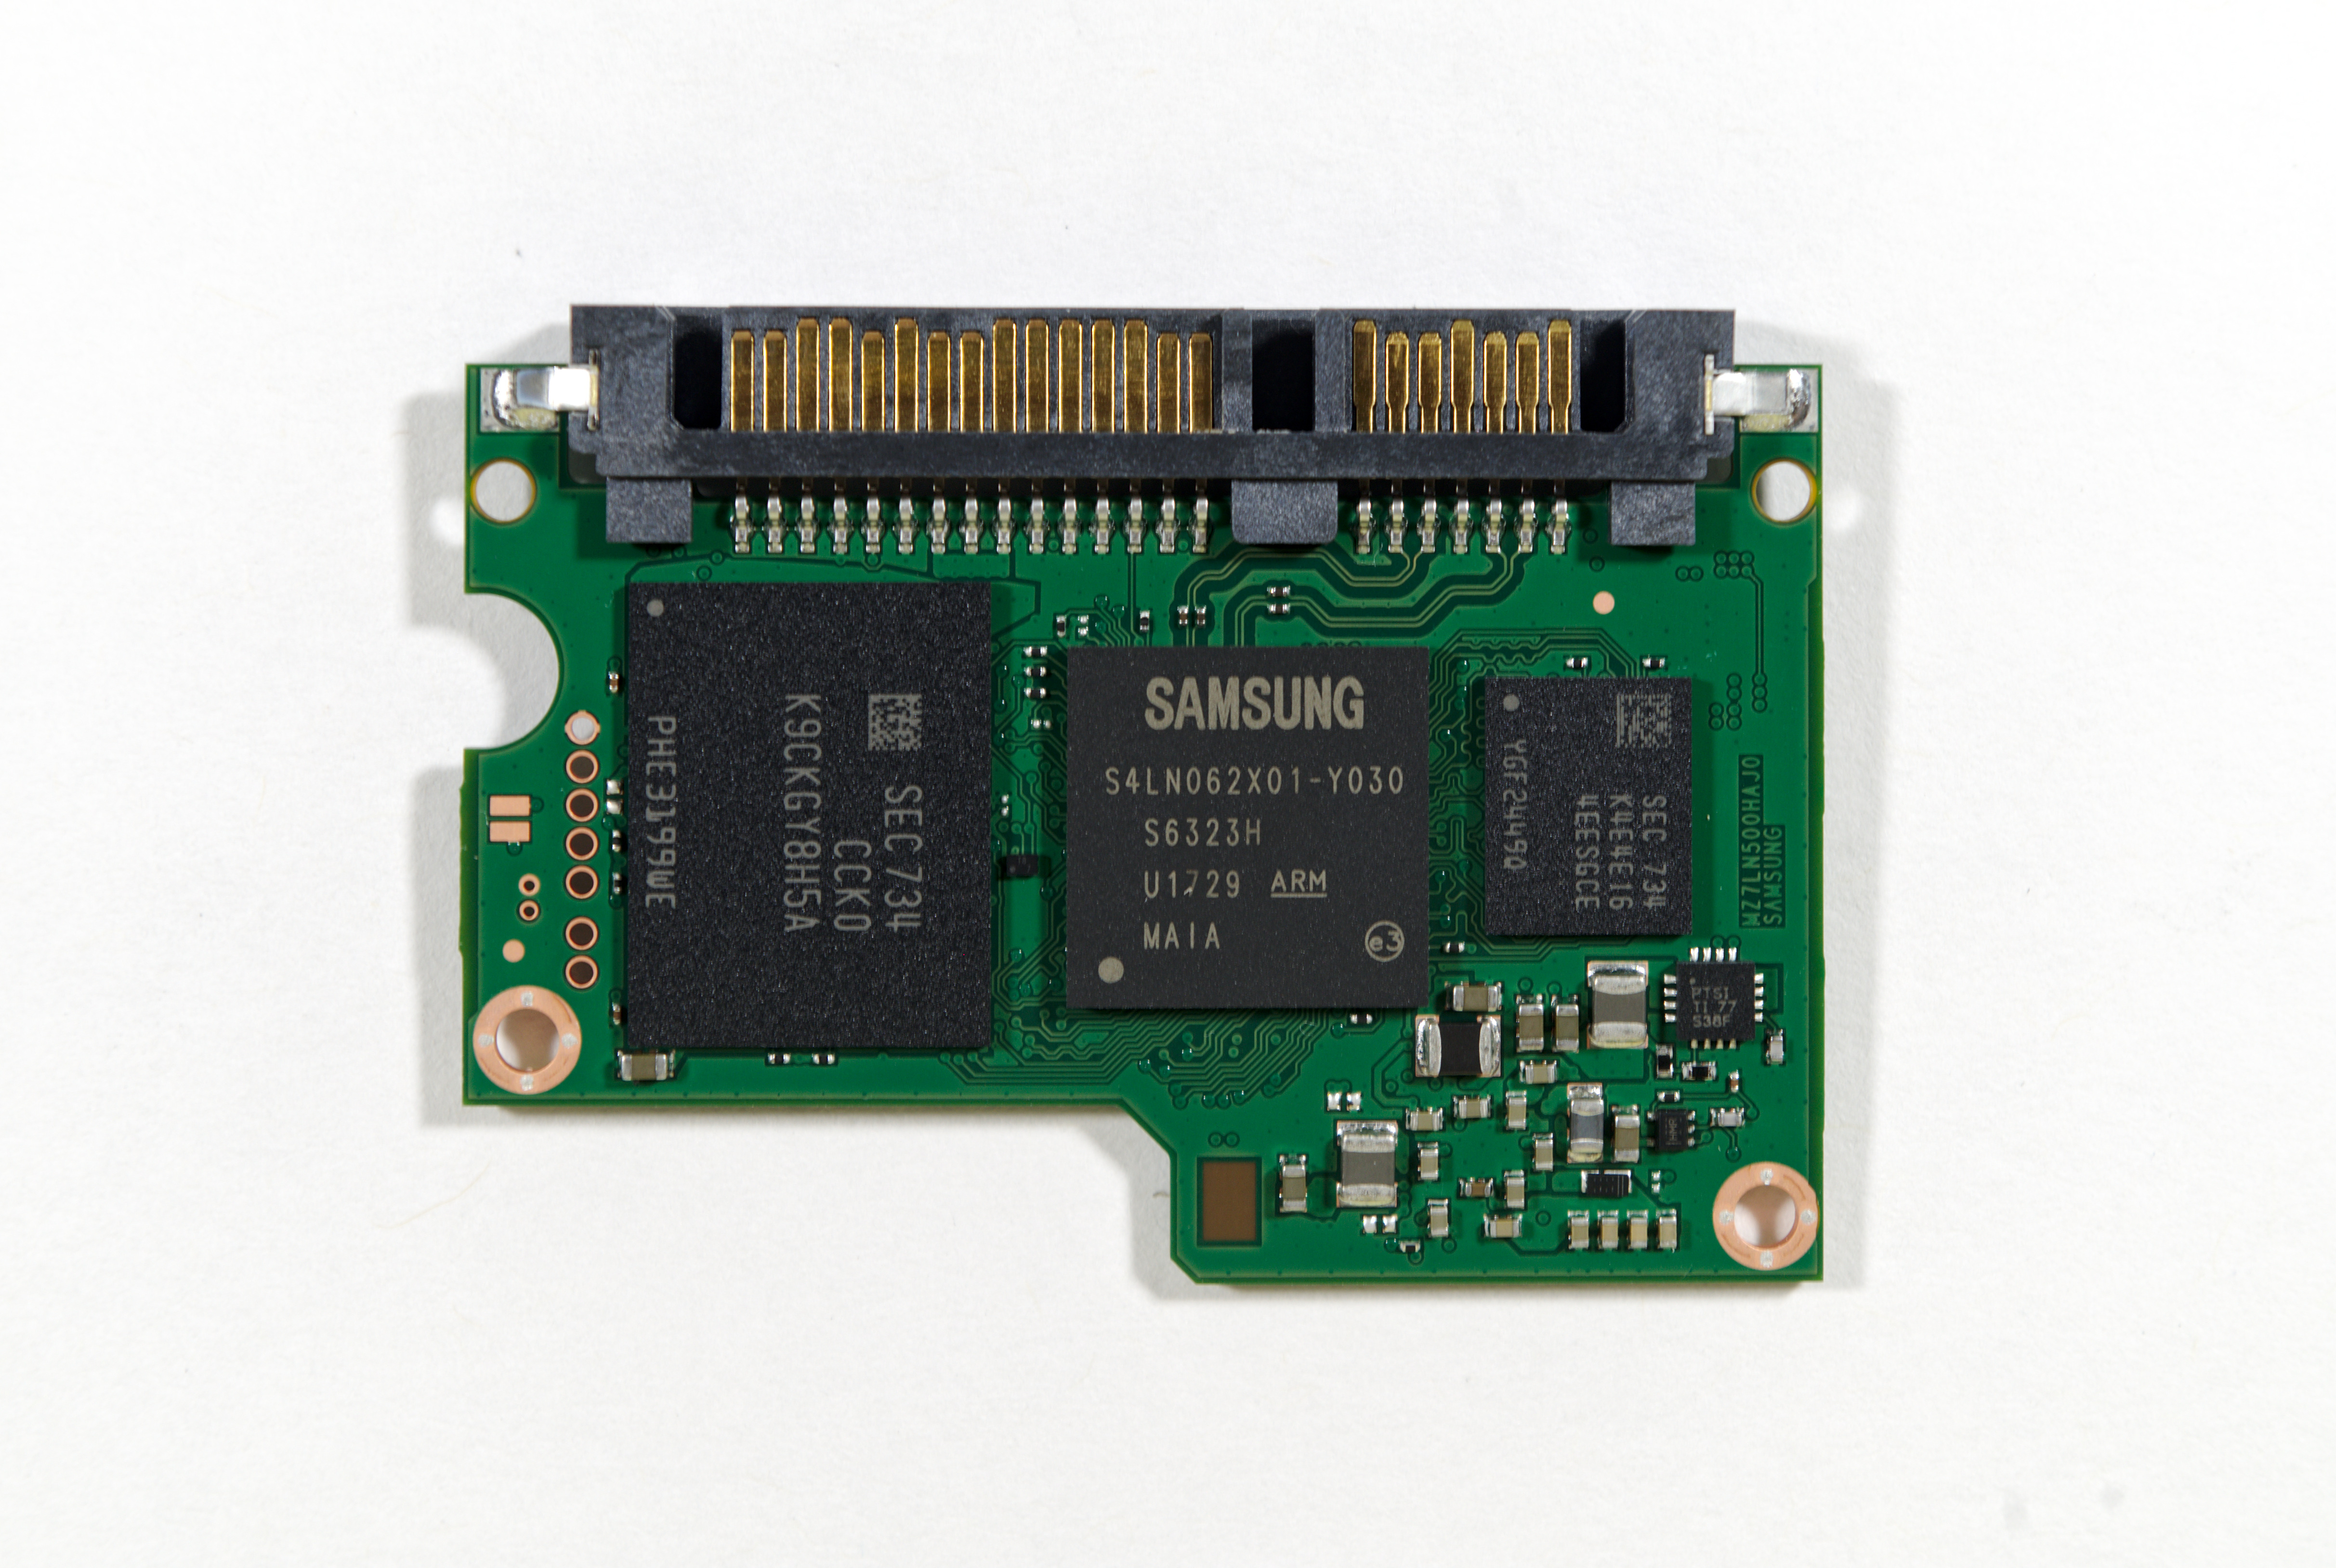 Vise dig manifestation Rå The Samsung SSD 850 120GB Review: A Little TLC for SATA